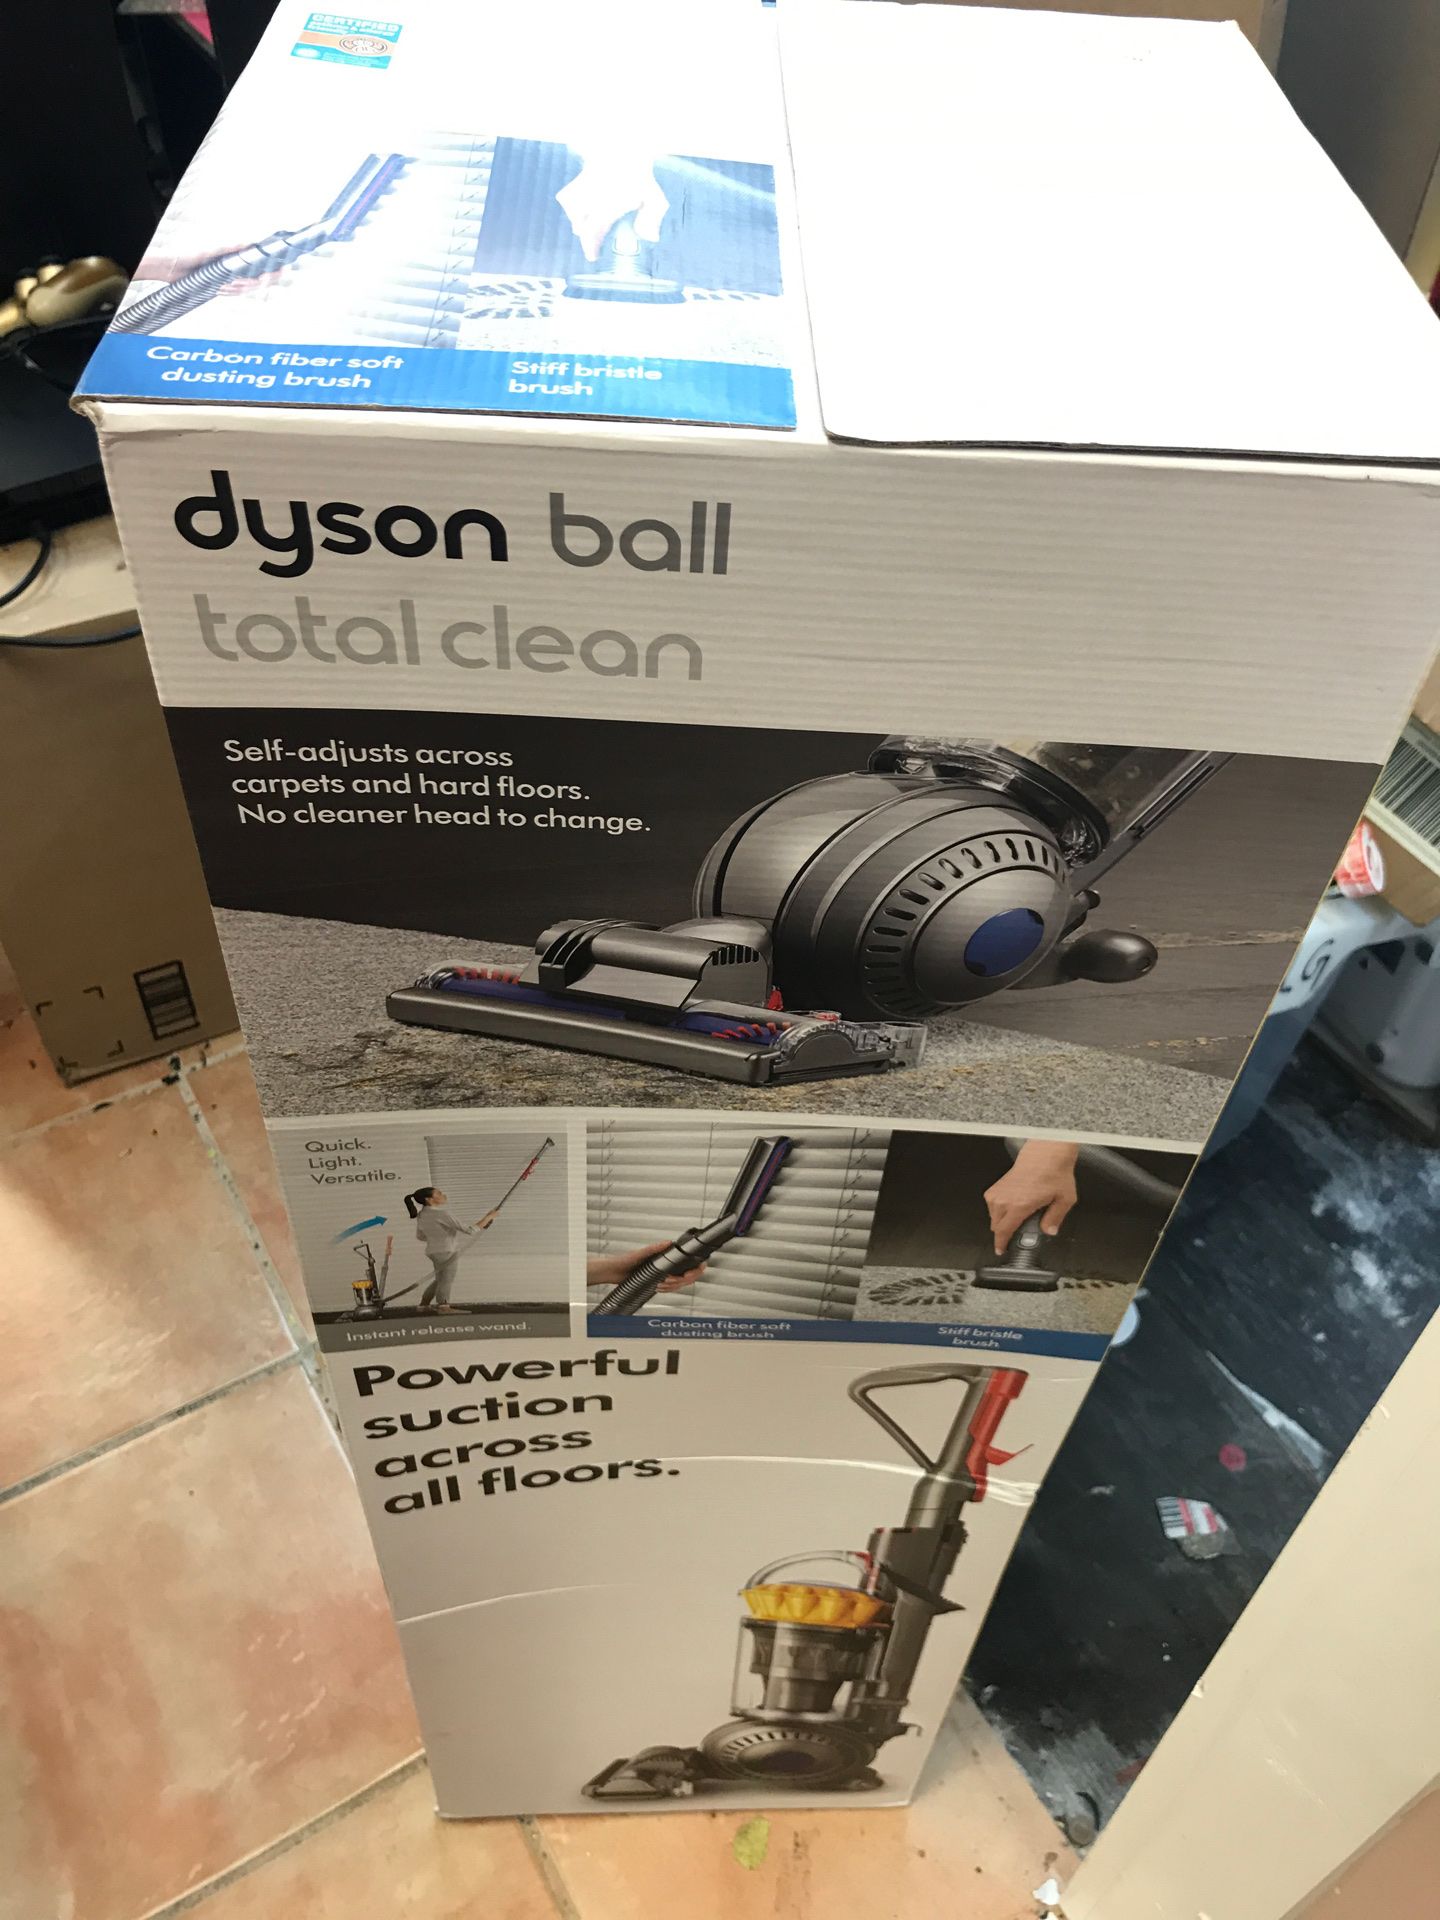 Dyson ball total clean vacuum